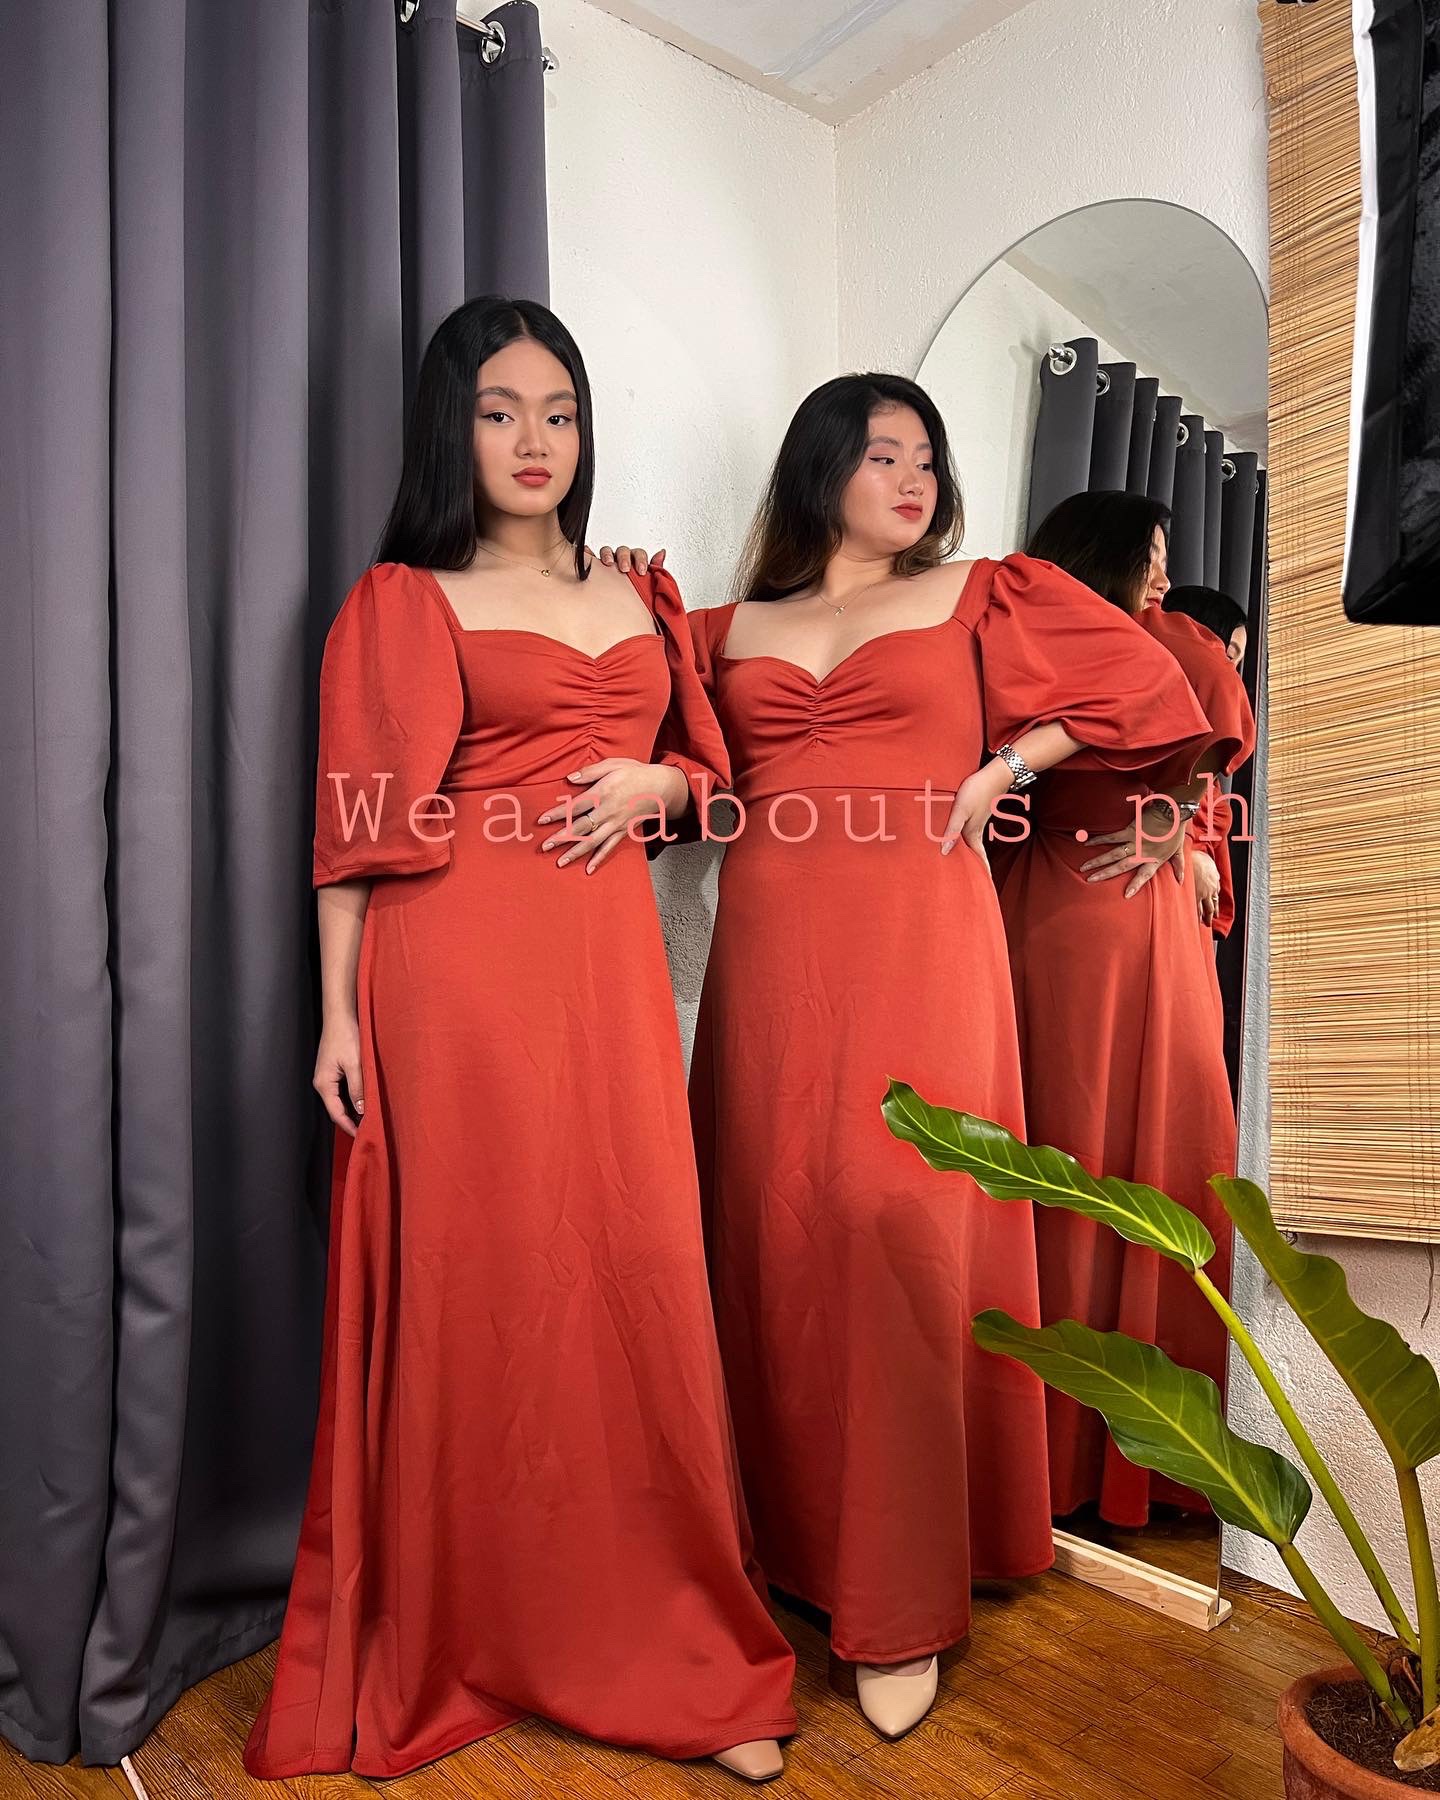 Custom made dresses for the occasion of filipiniana wedding